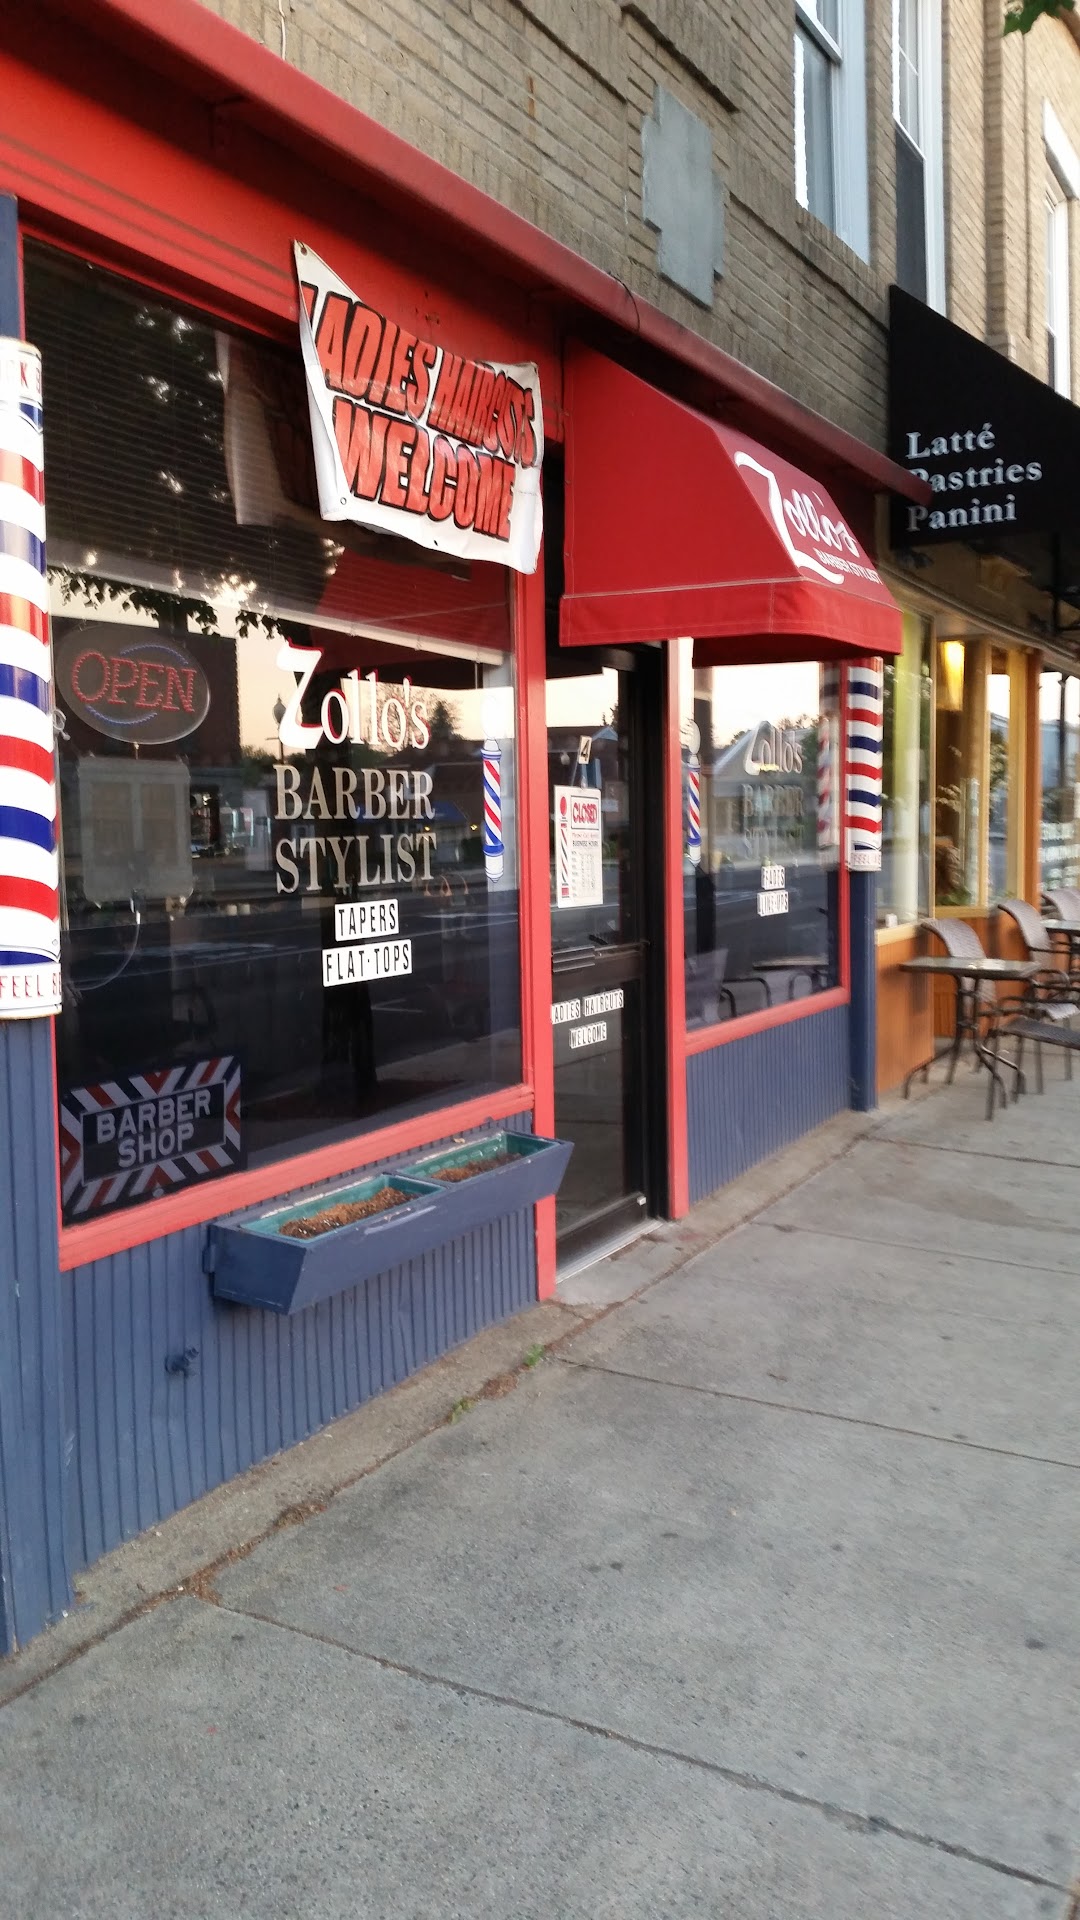 Zollos Barber Shop